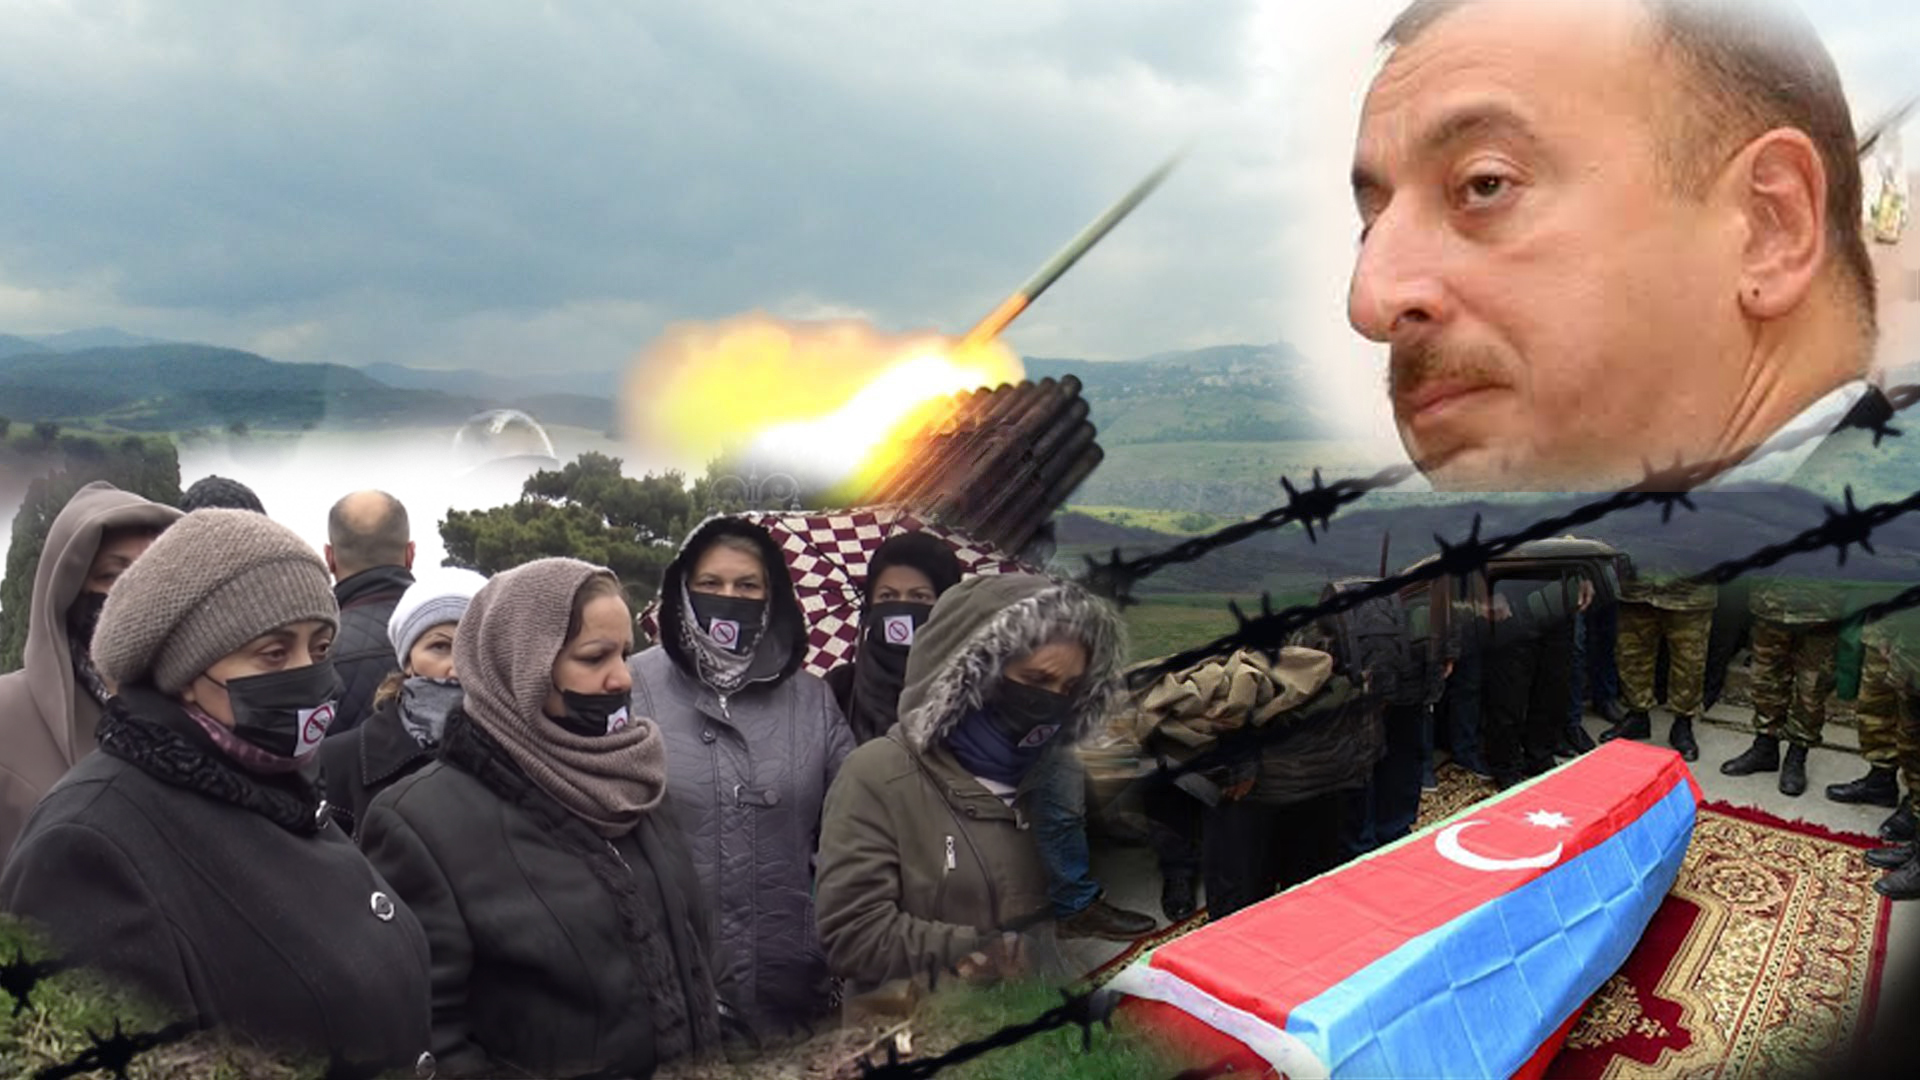 Трон Алиева опасно шатается - Азербайджан скоро будет не таким, каким был до 27 сентября